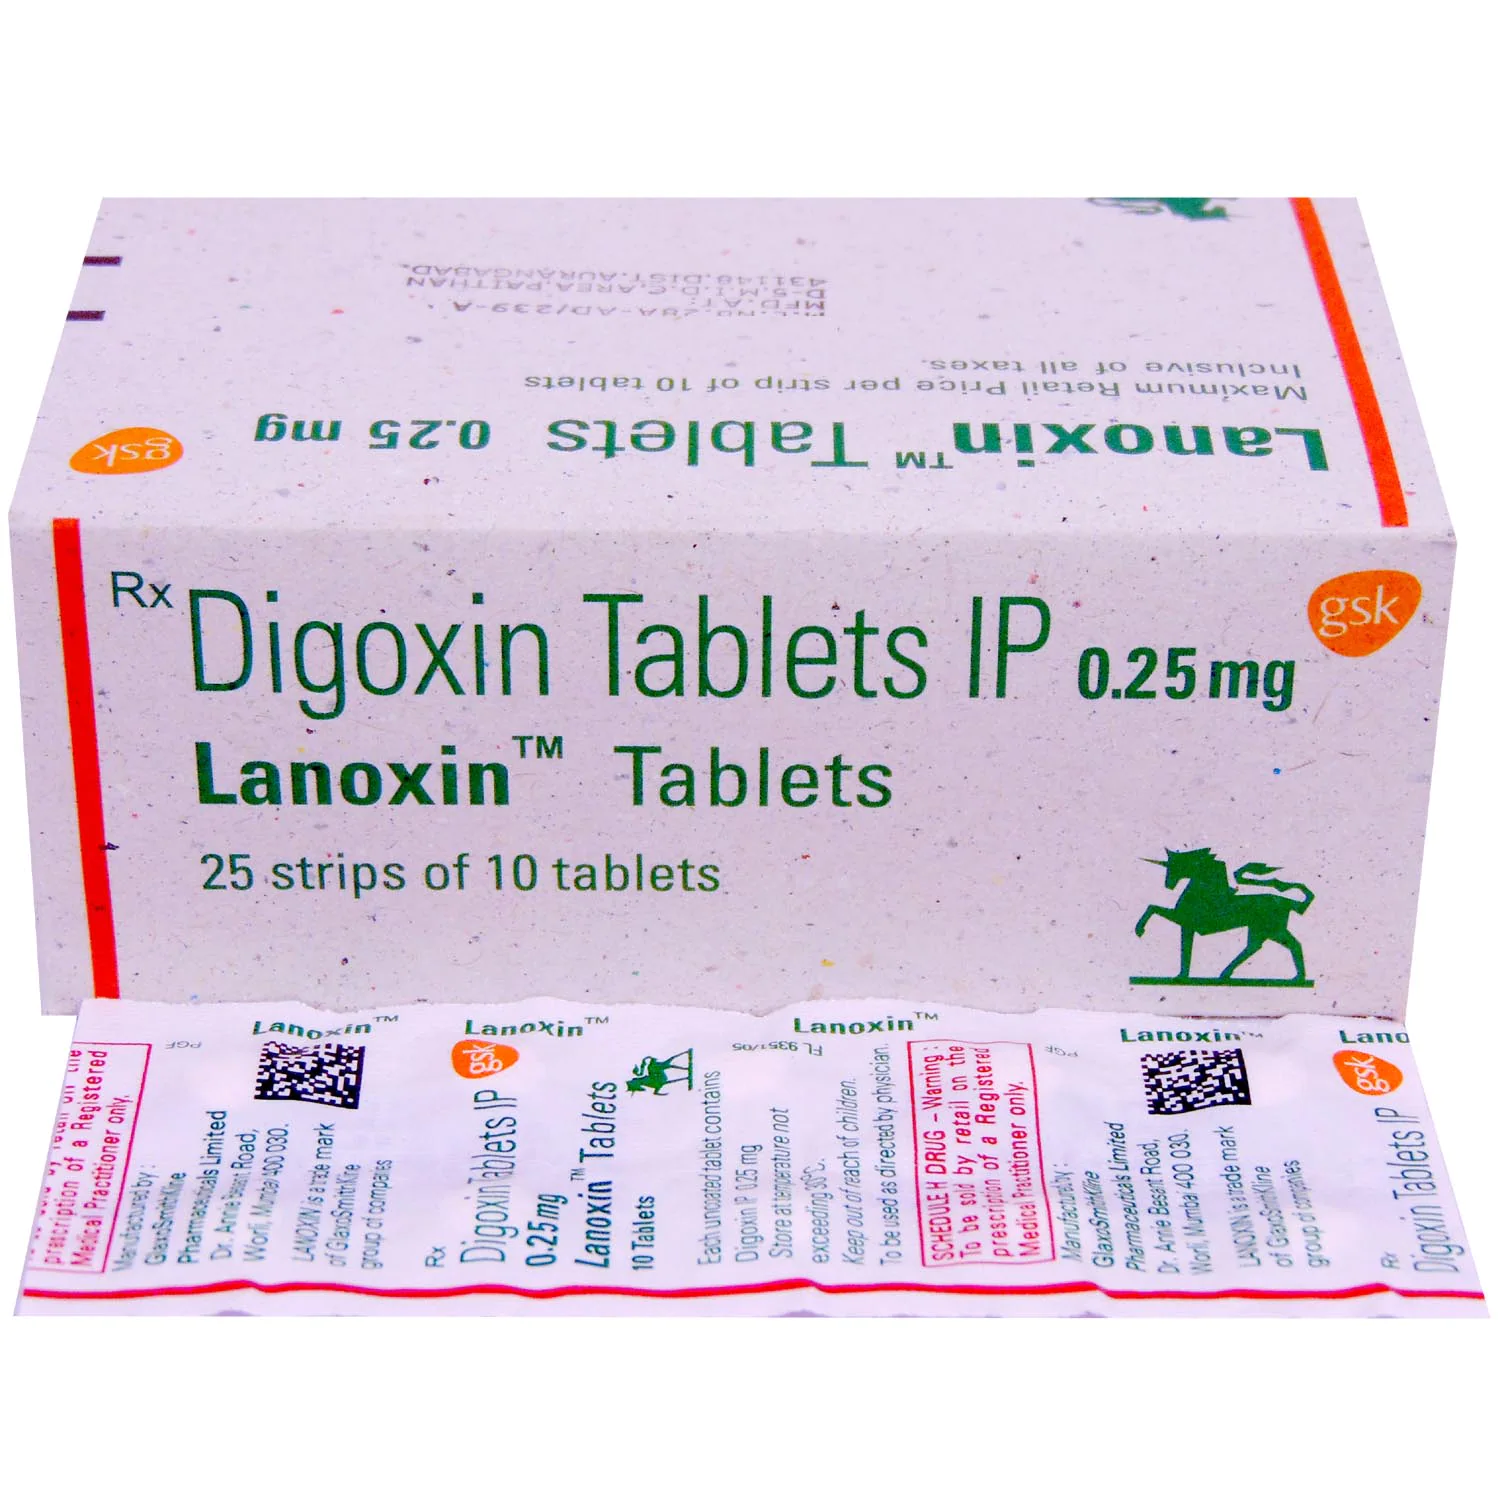 Lanoxin pills